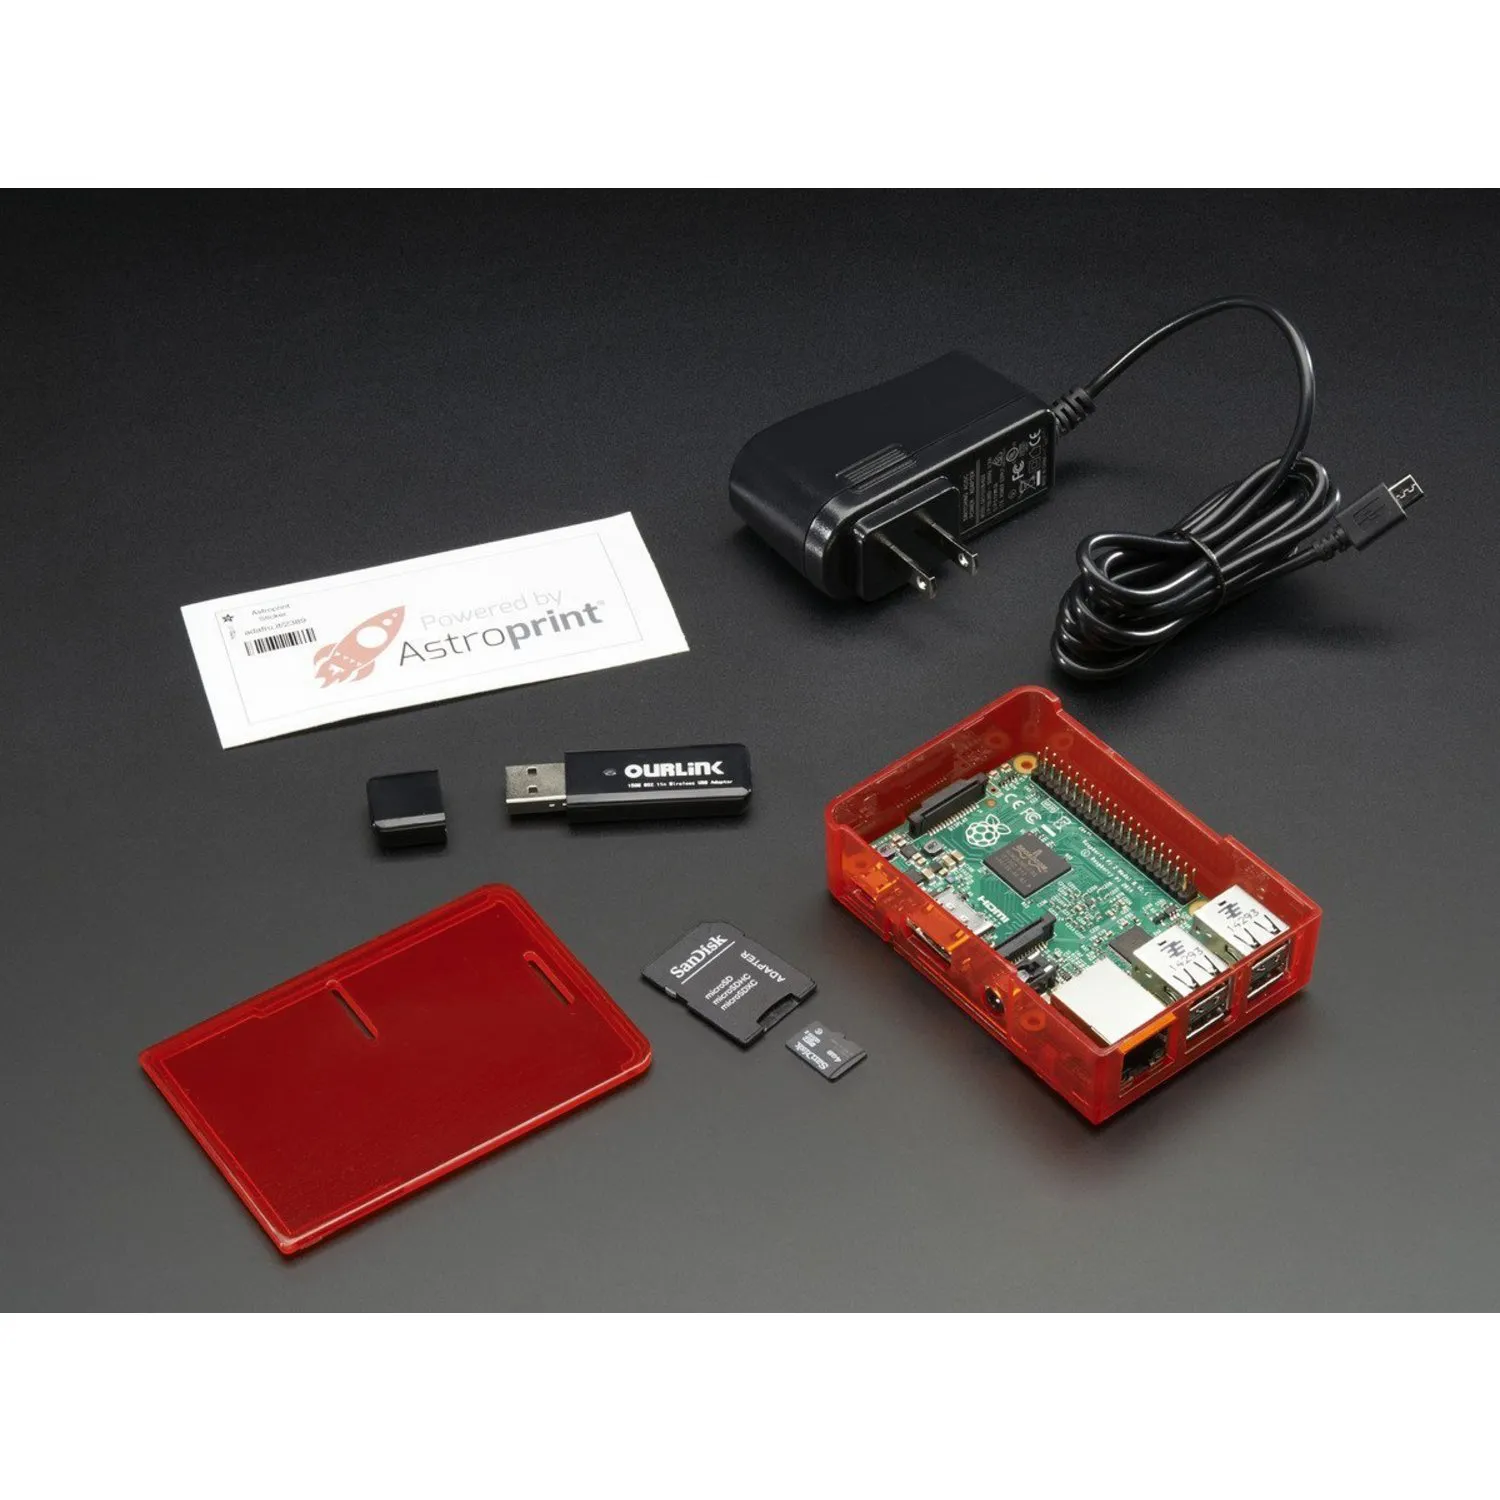 Photo of AstroBox pack - Includes Raspberry Pi 2, Model B